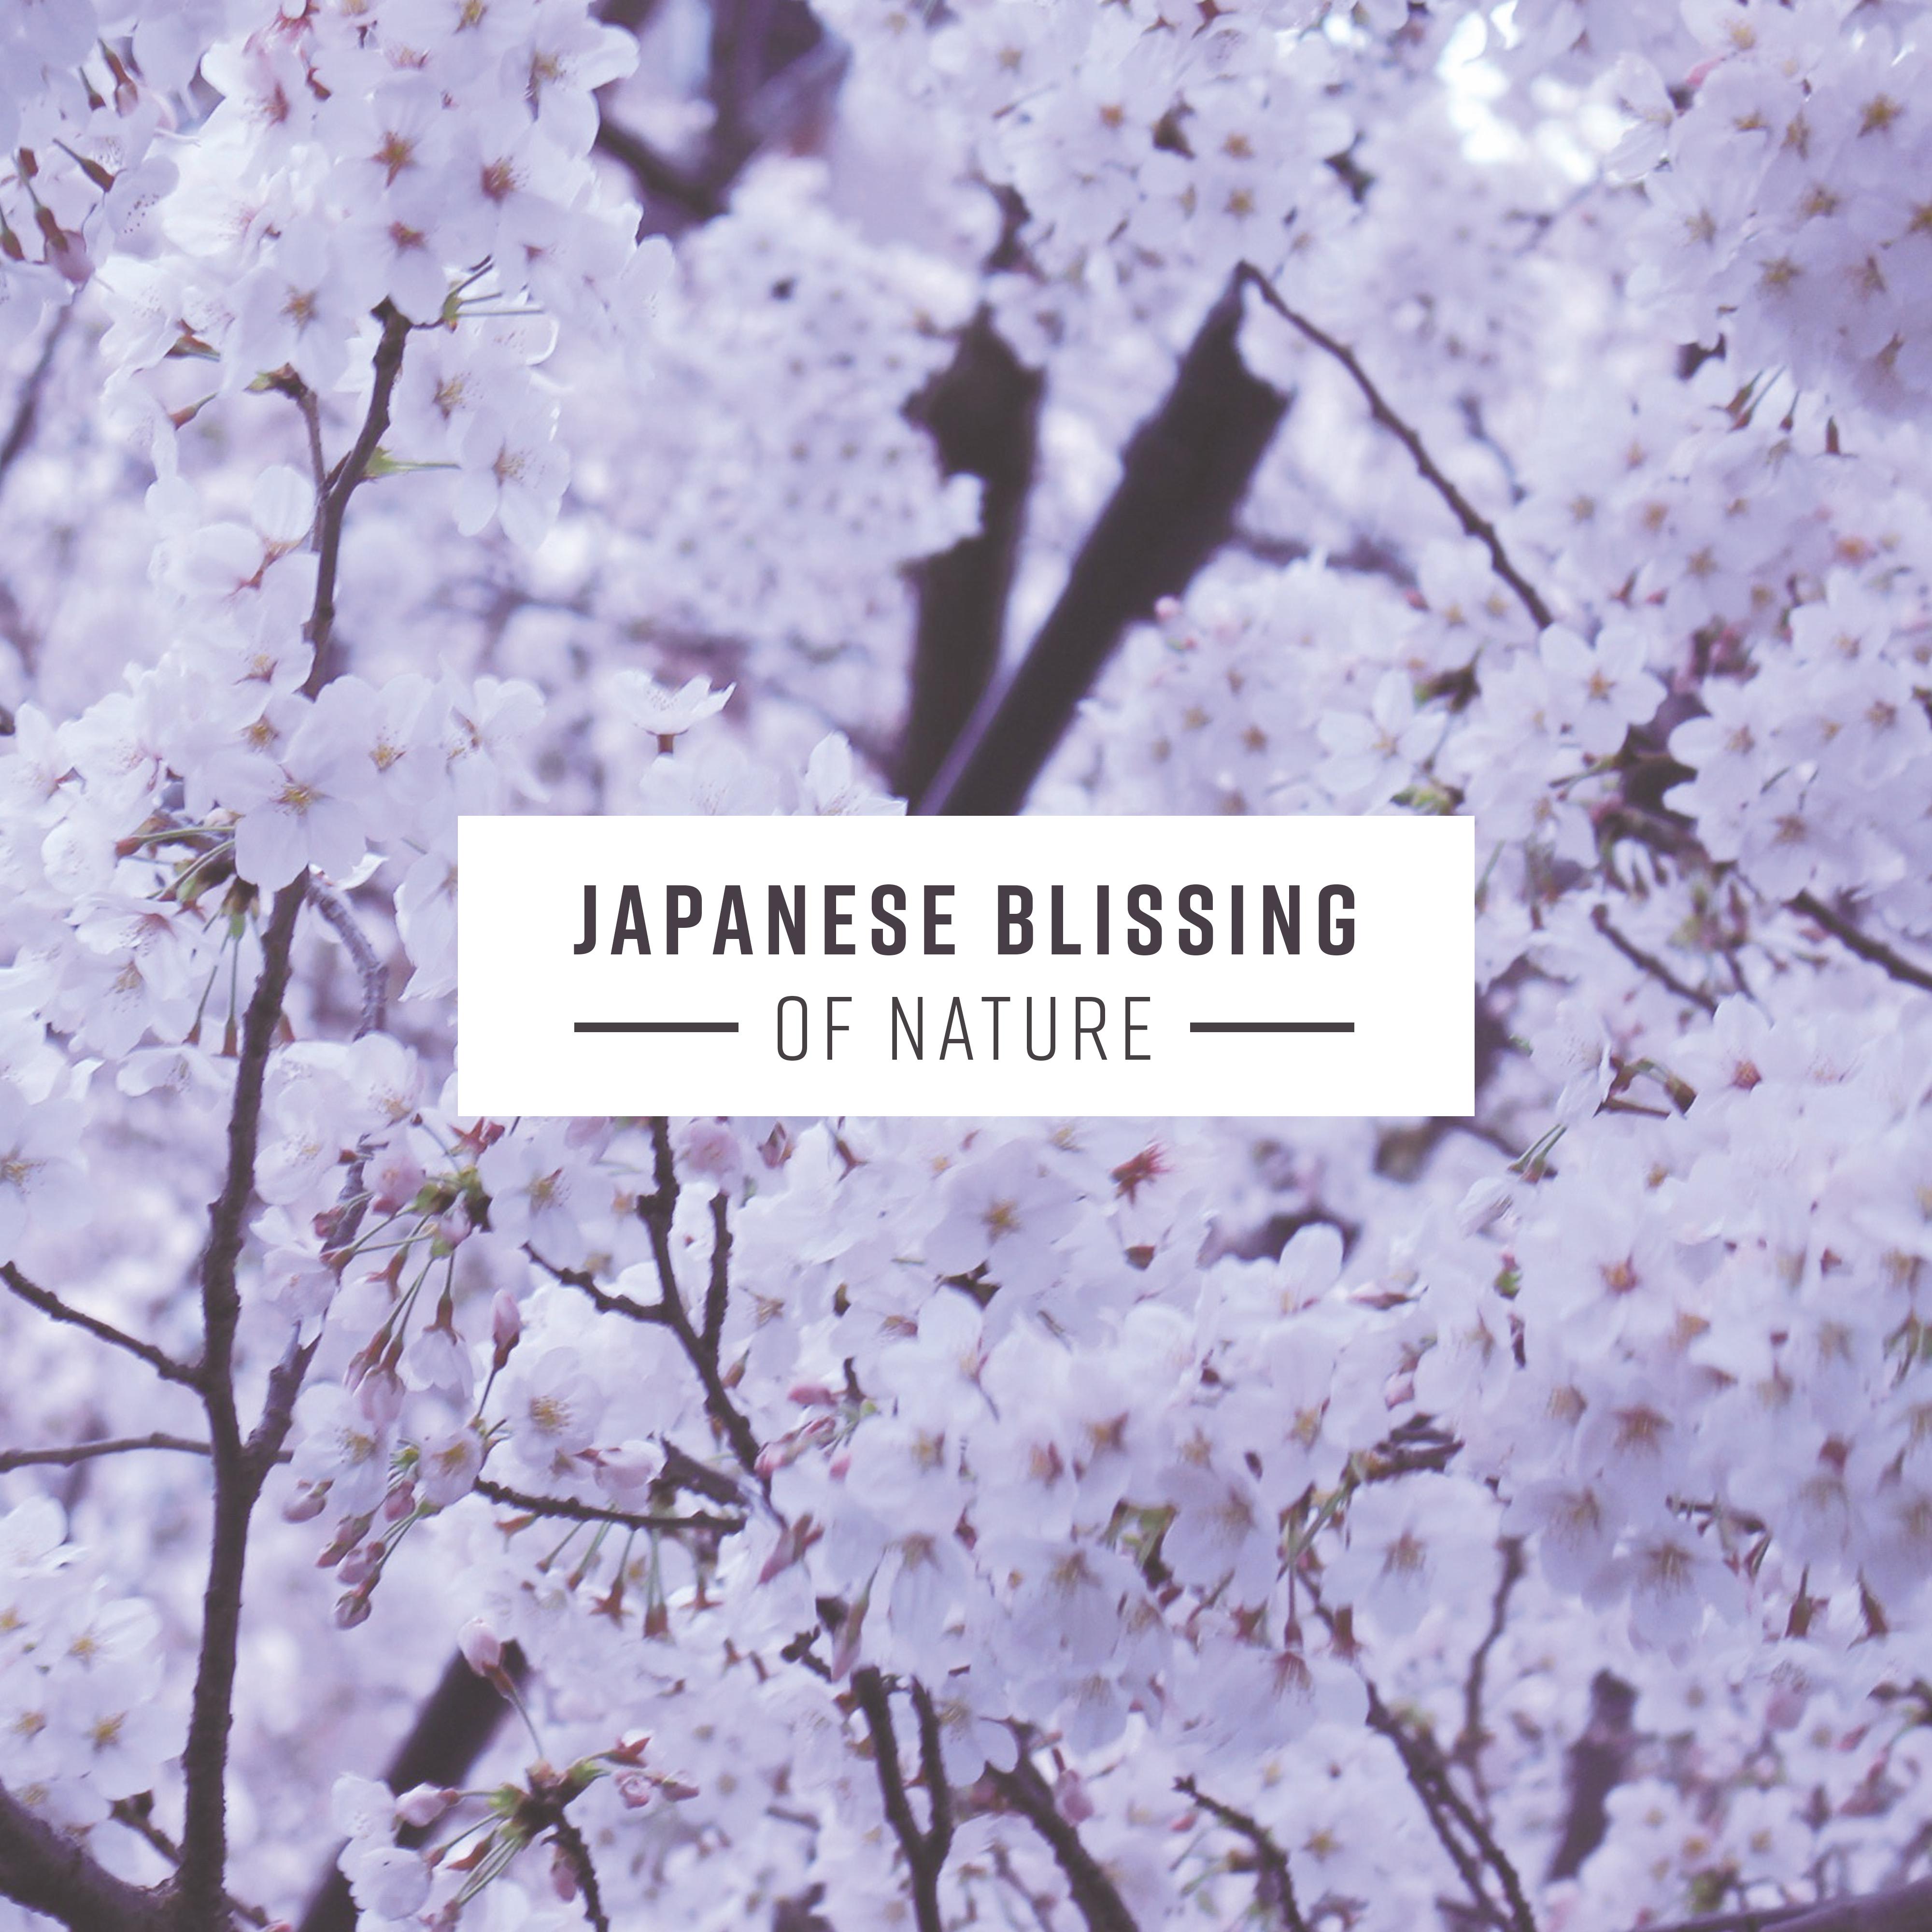 Japanese Blissing of Nature